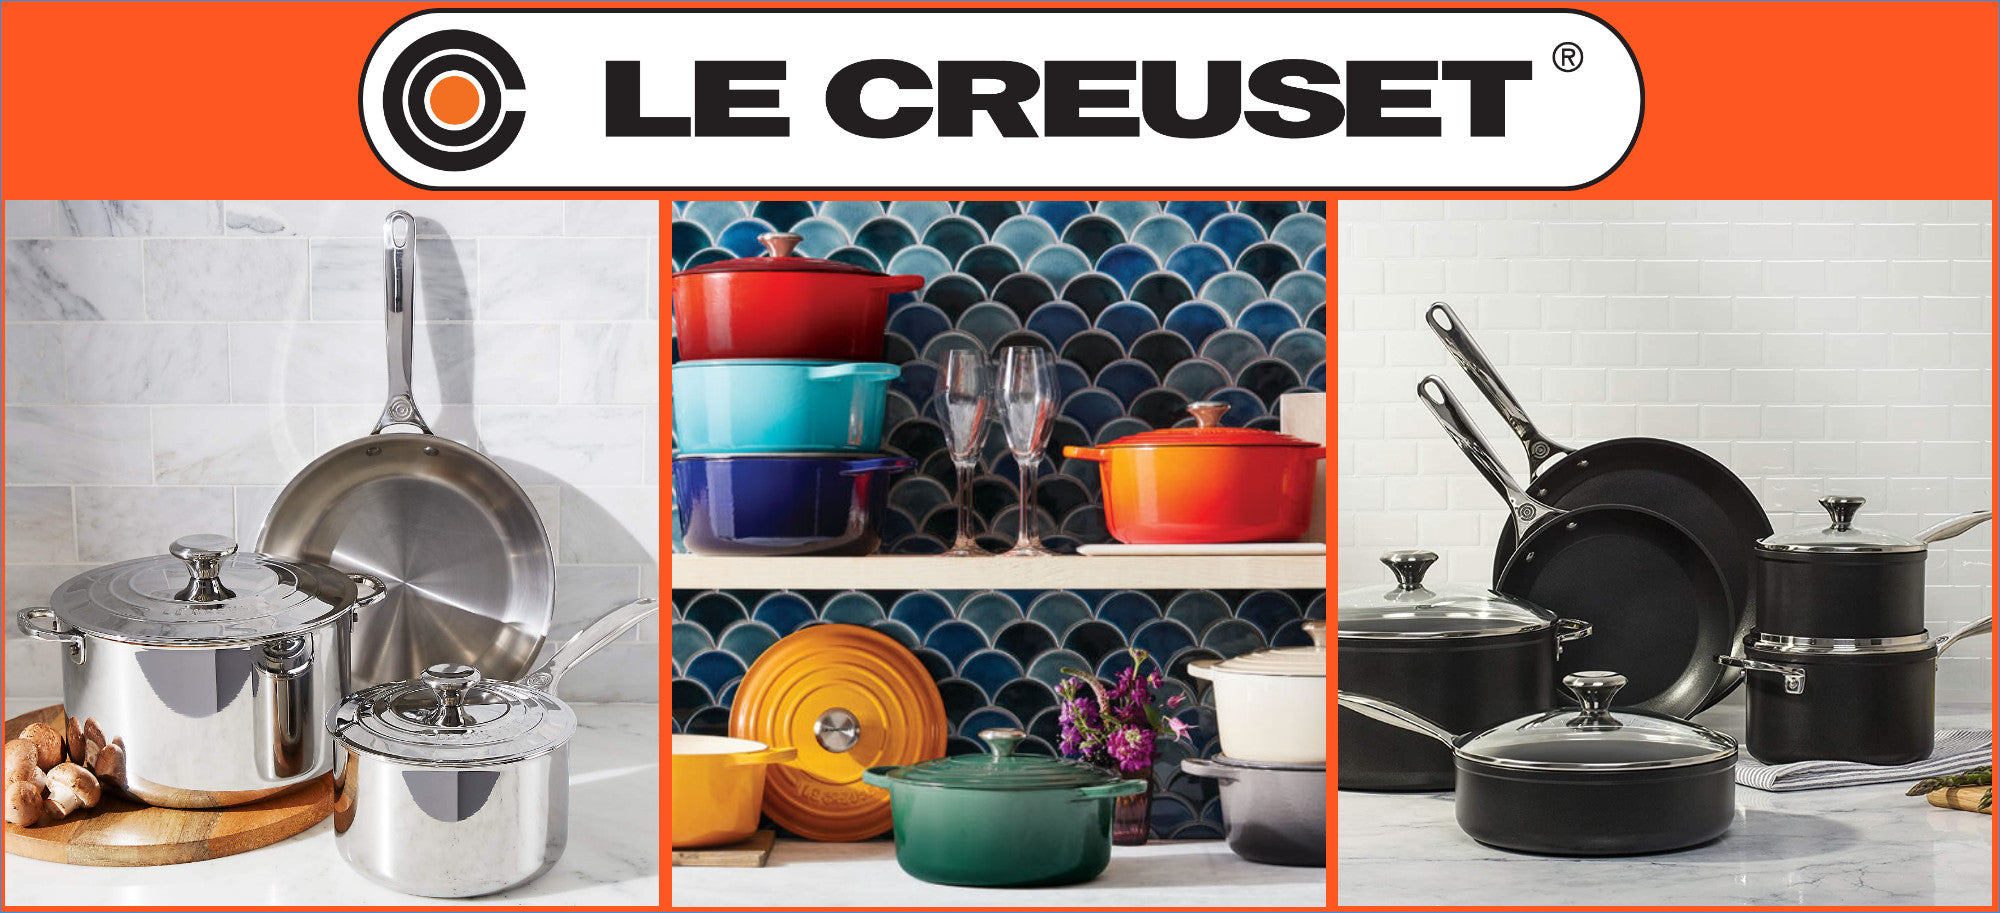 Le Creuset Signature Enameled Cast Iron Cookware Set, 7-Piece Color Cerise